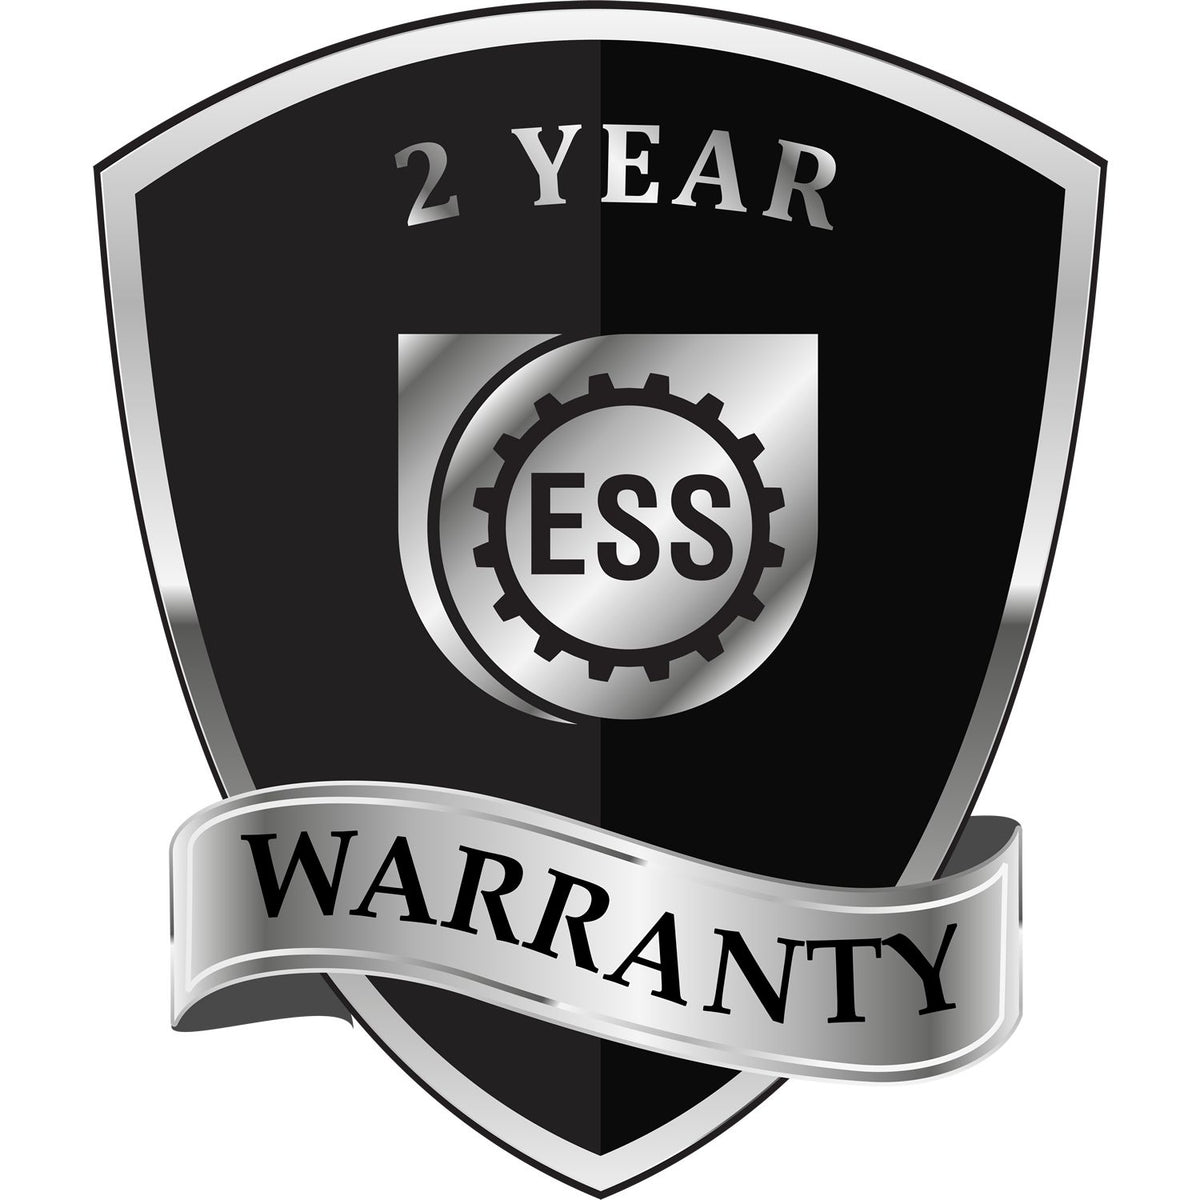 A black and silver badge or emblem showing warranty information for the Hybrid Ohio Land Surveyor Seal